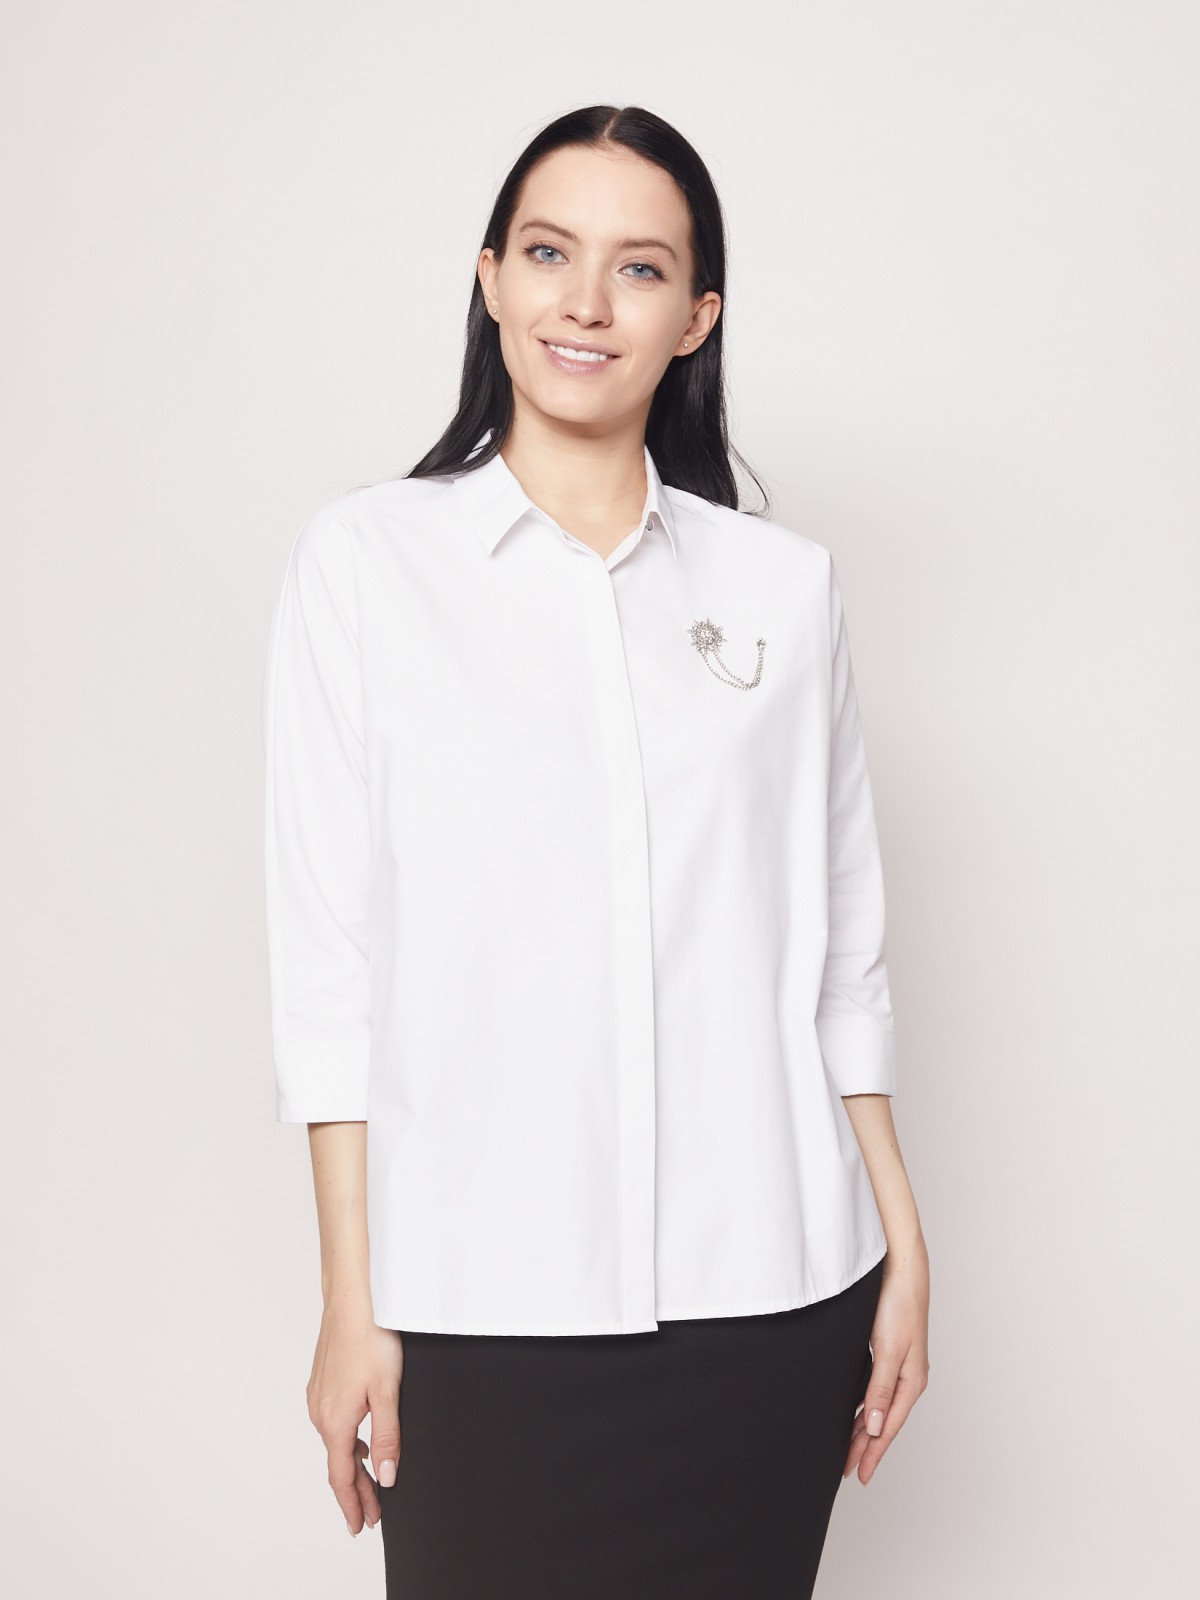 Рубашка с декоративной брошью zolla 221311159123, цвет белый, размер XS - фото 2